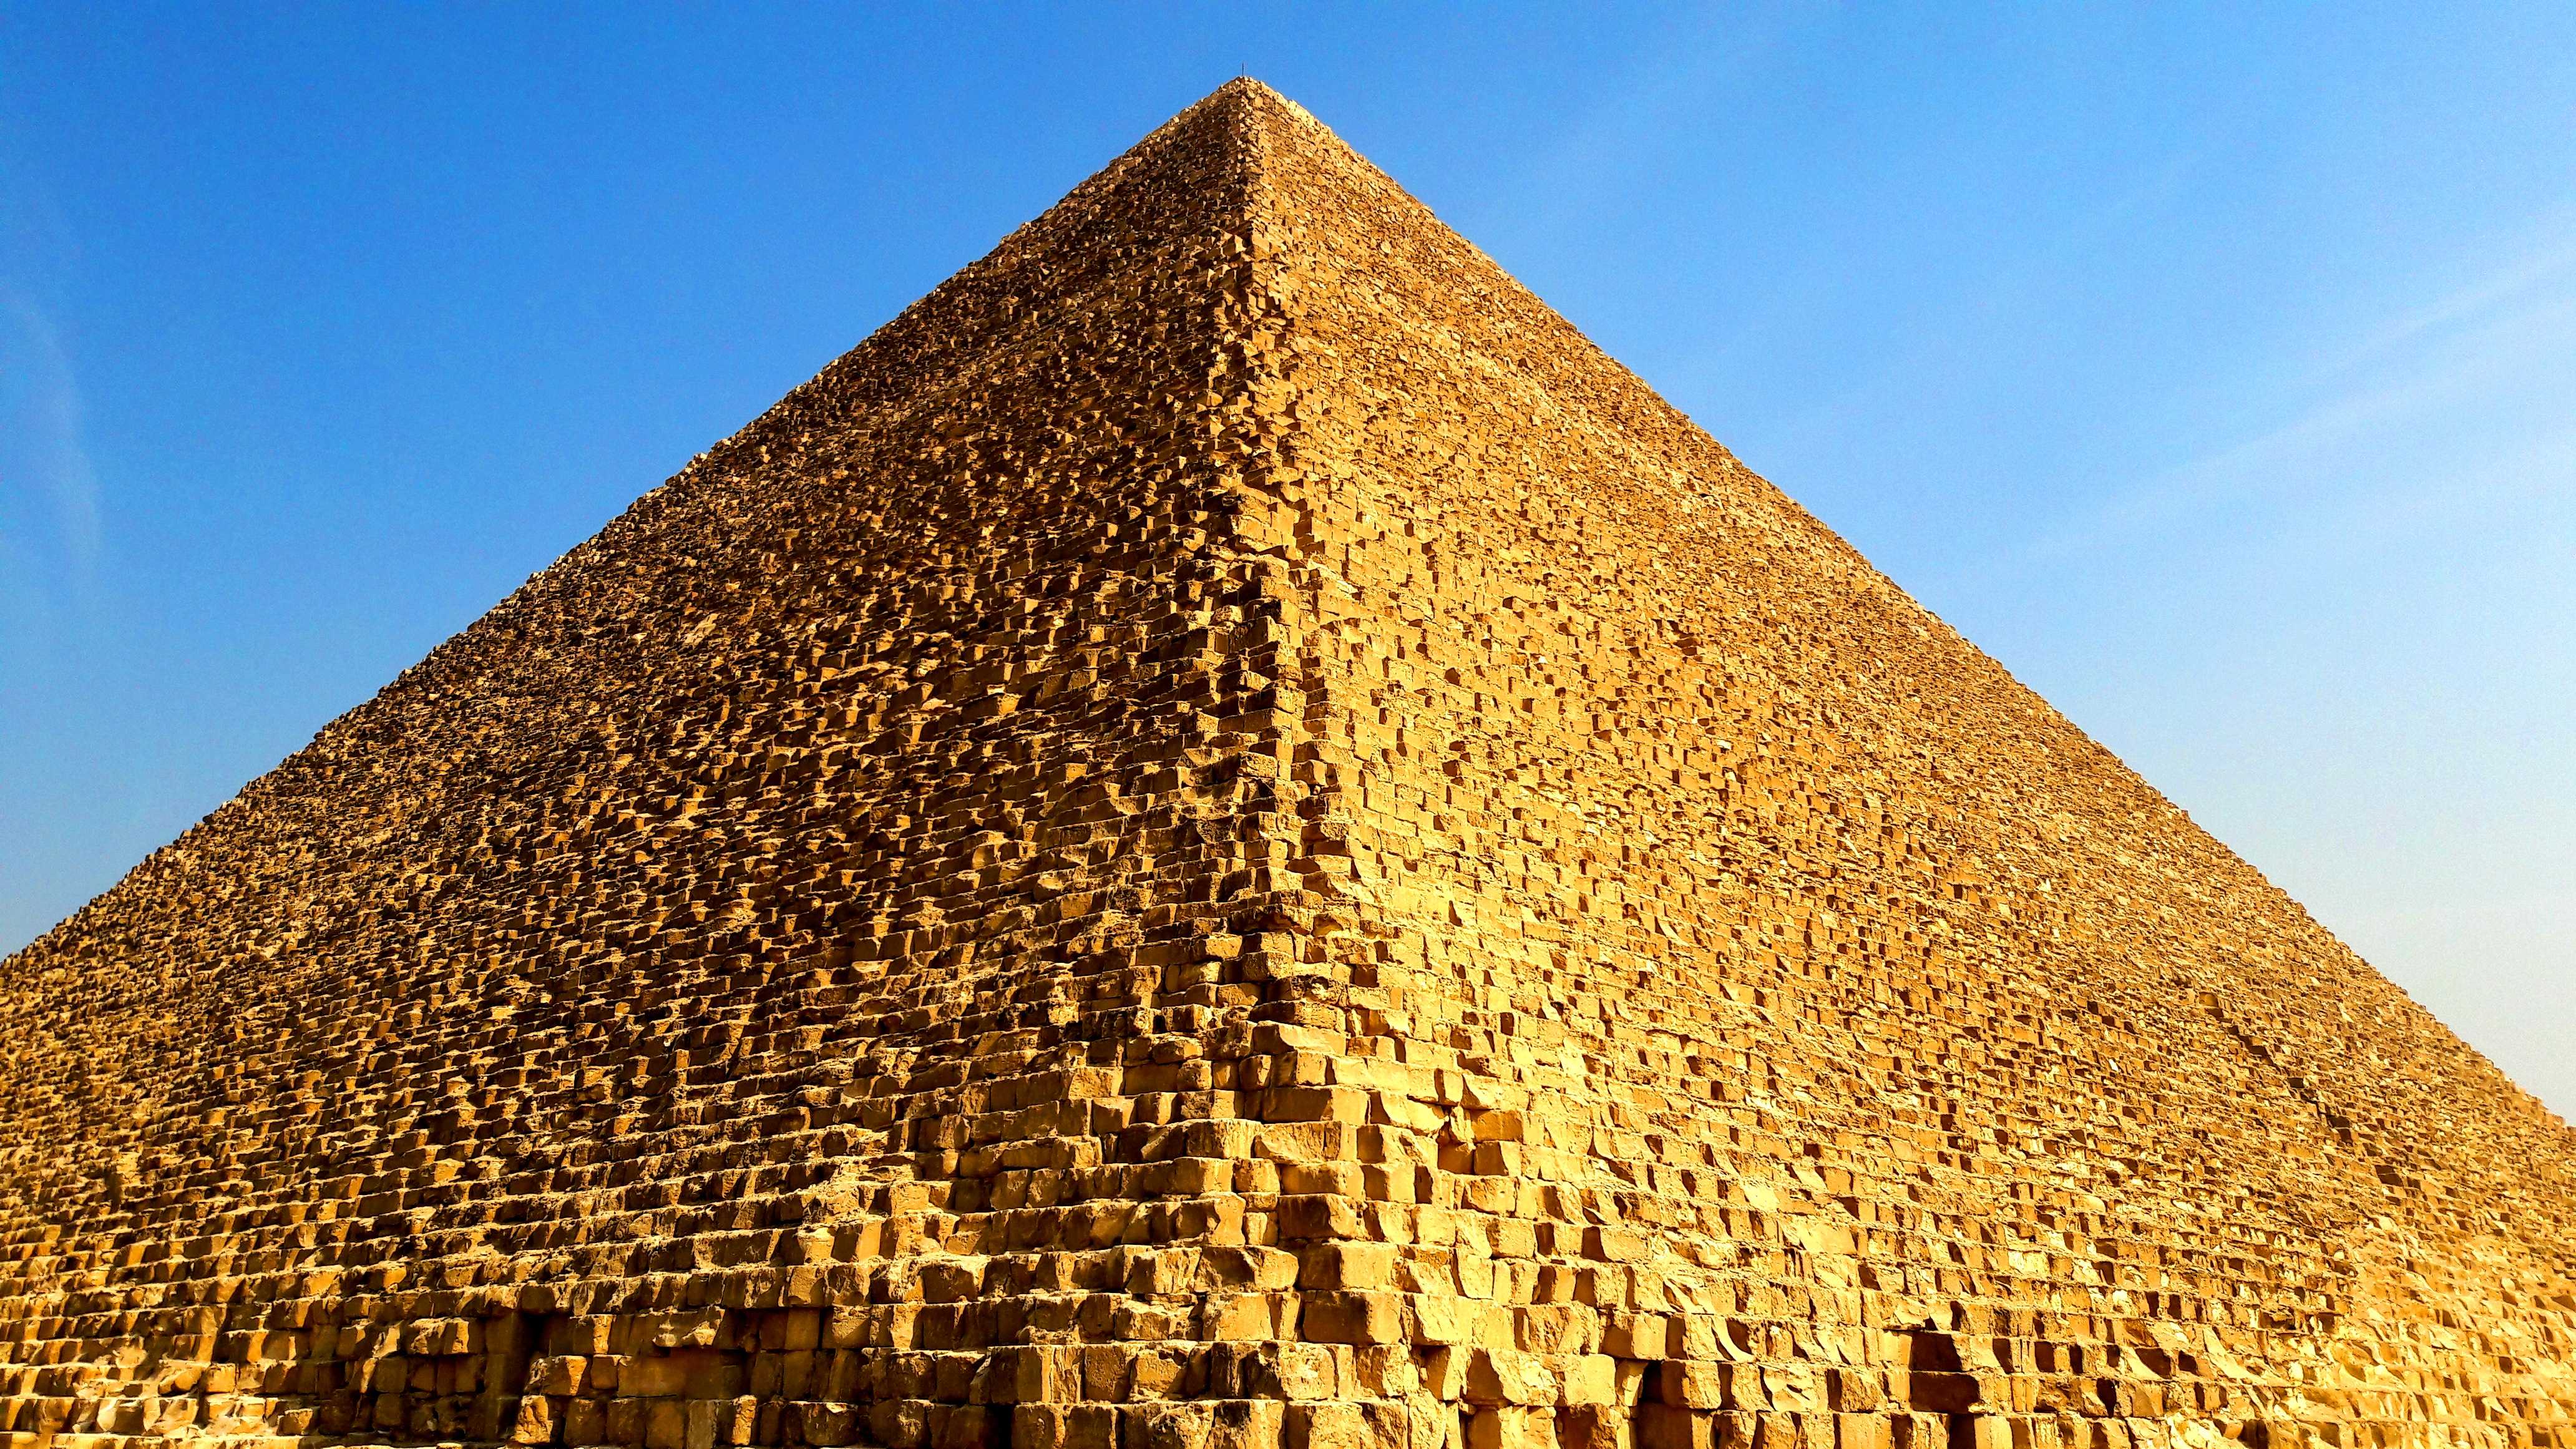 Чудеса св. Пирамида Хеопса. 7 Чудес света пирамида Хеопса. Пирамида Хеопса Золотая вершина. Пирамида Хуфу семь чудес света.